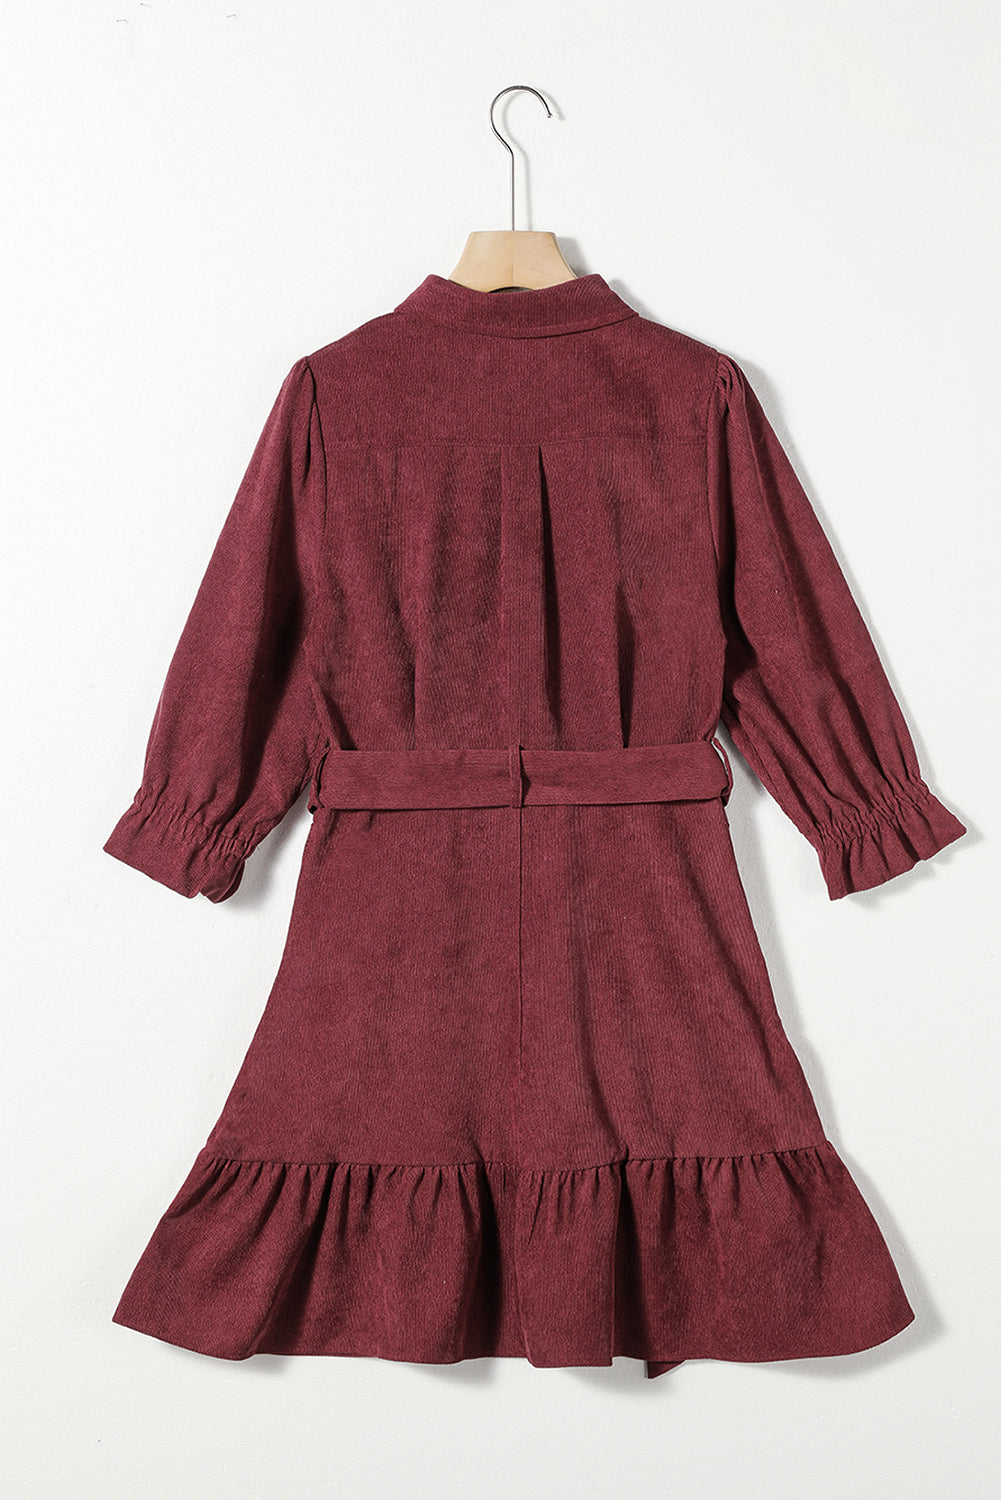 Red Dahlia Collared Buttons Front Ruffled Hem Shirt Corduroy Dress